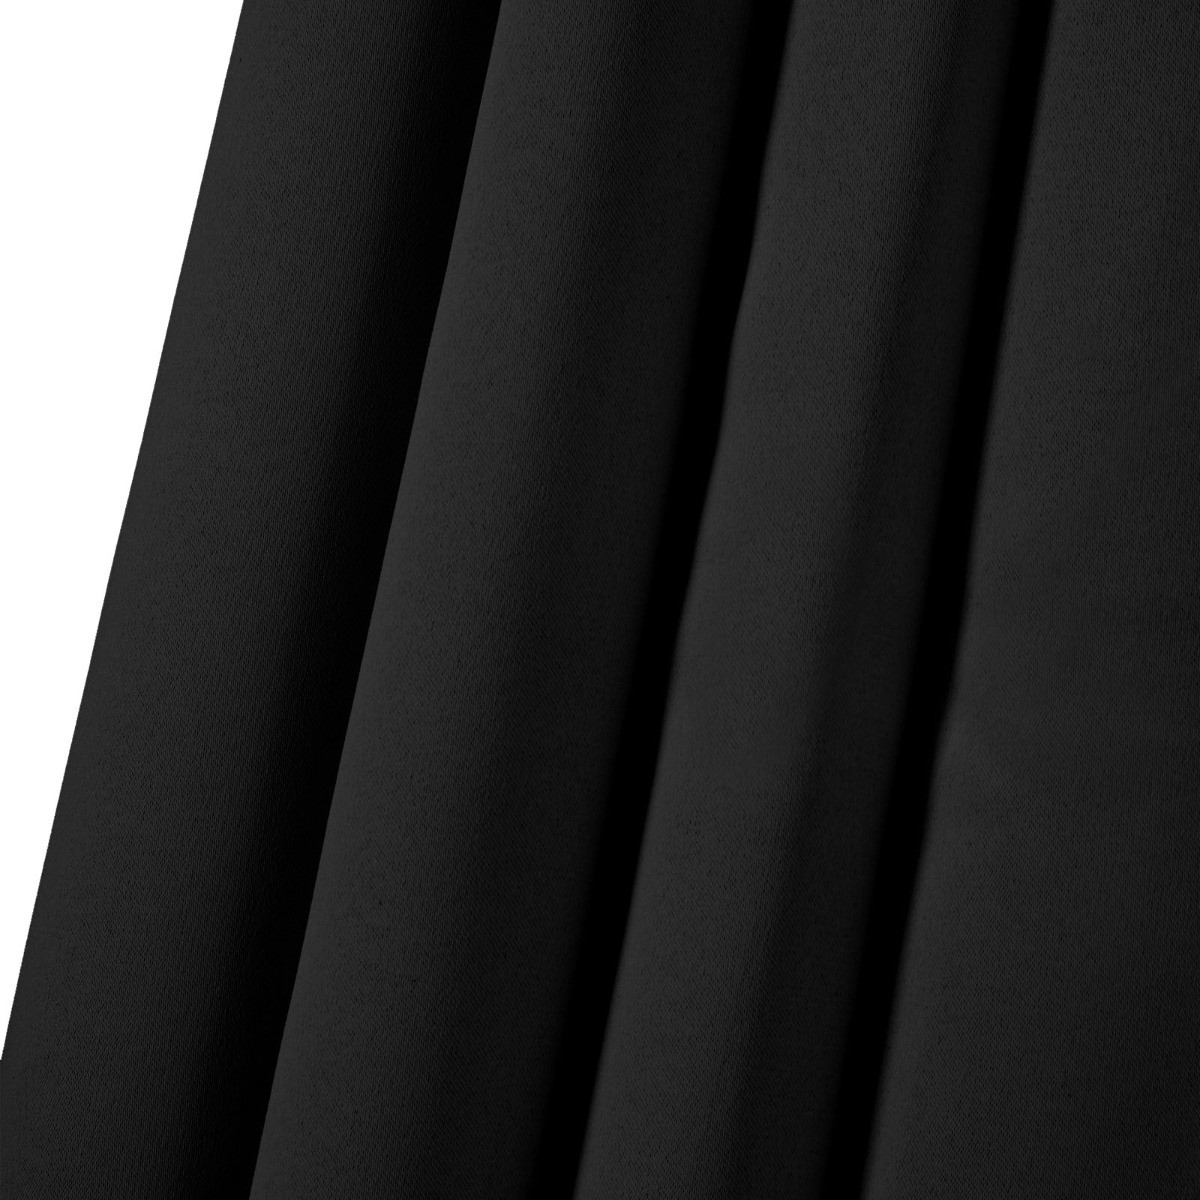 Dreamscene Eyelet Blackout Curtains - Black, 46" X 72">